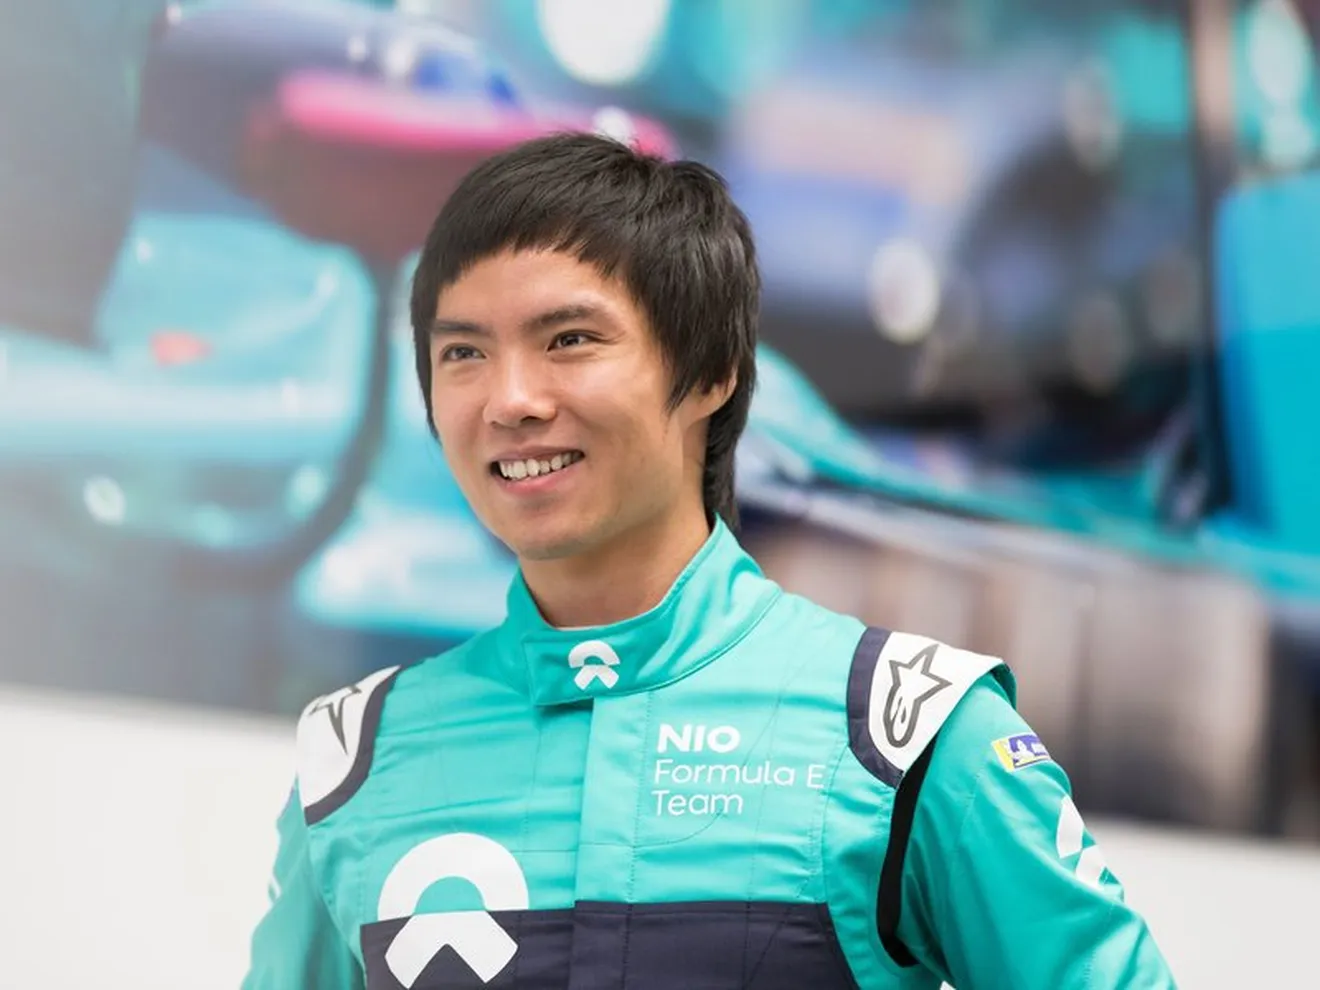 Ma Qing Hua, nuevo piloto reserva de NIO Fórmula E